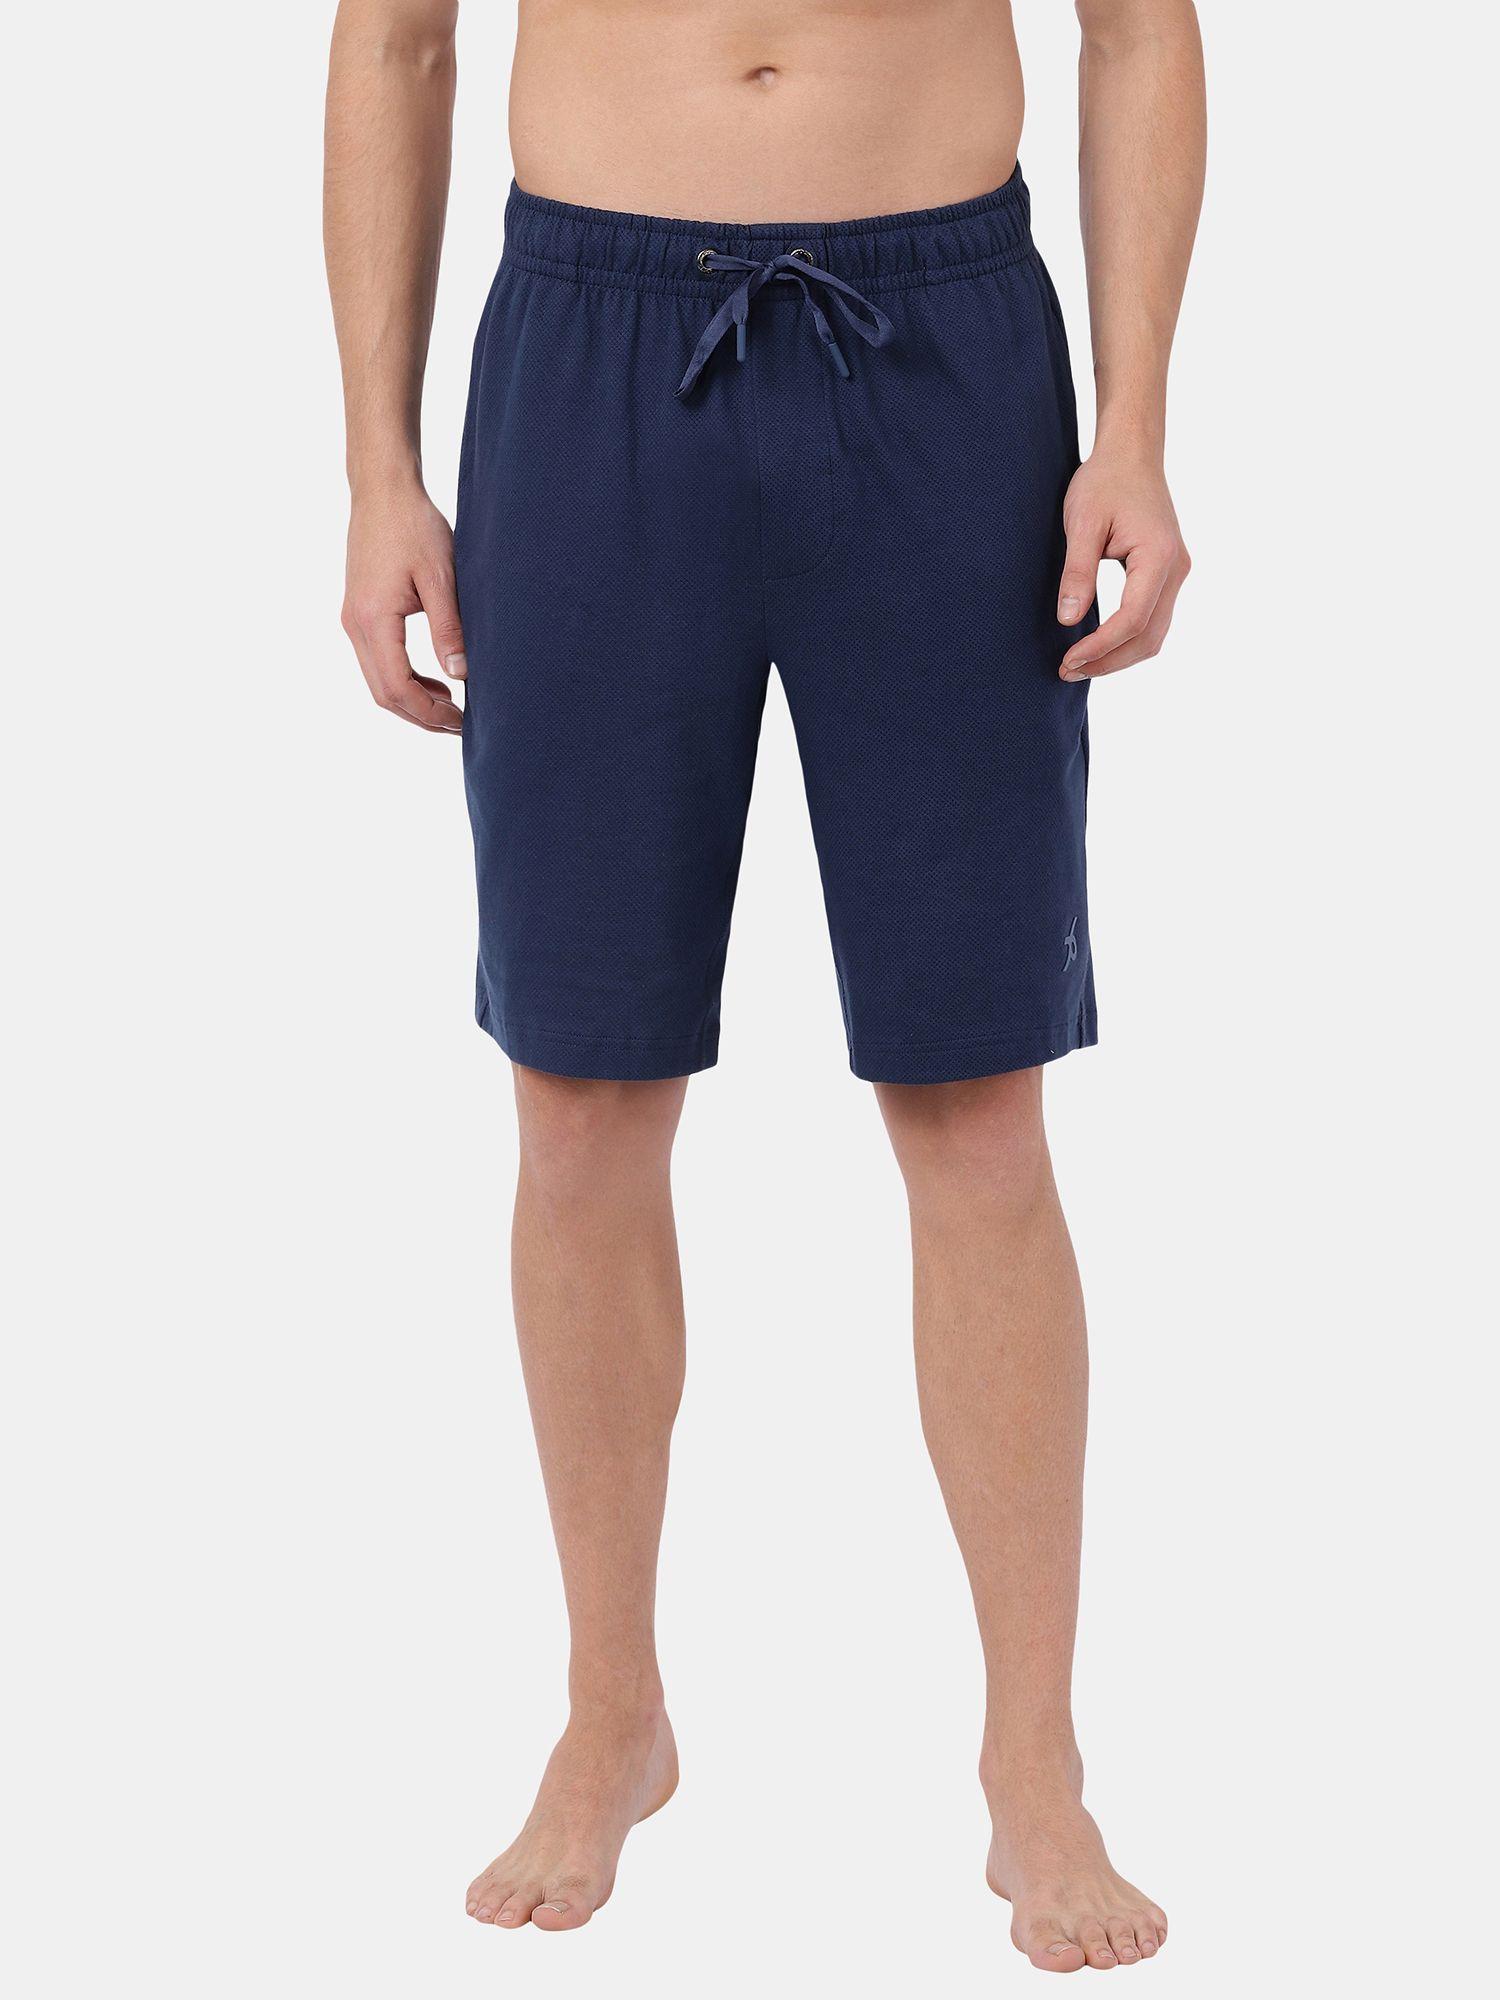 Am37 Mens Super Combed Cotton Rich Mesh Elastane Regular Fit Solid Shorts-Insignia Blue